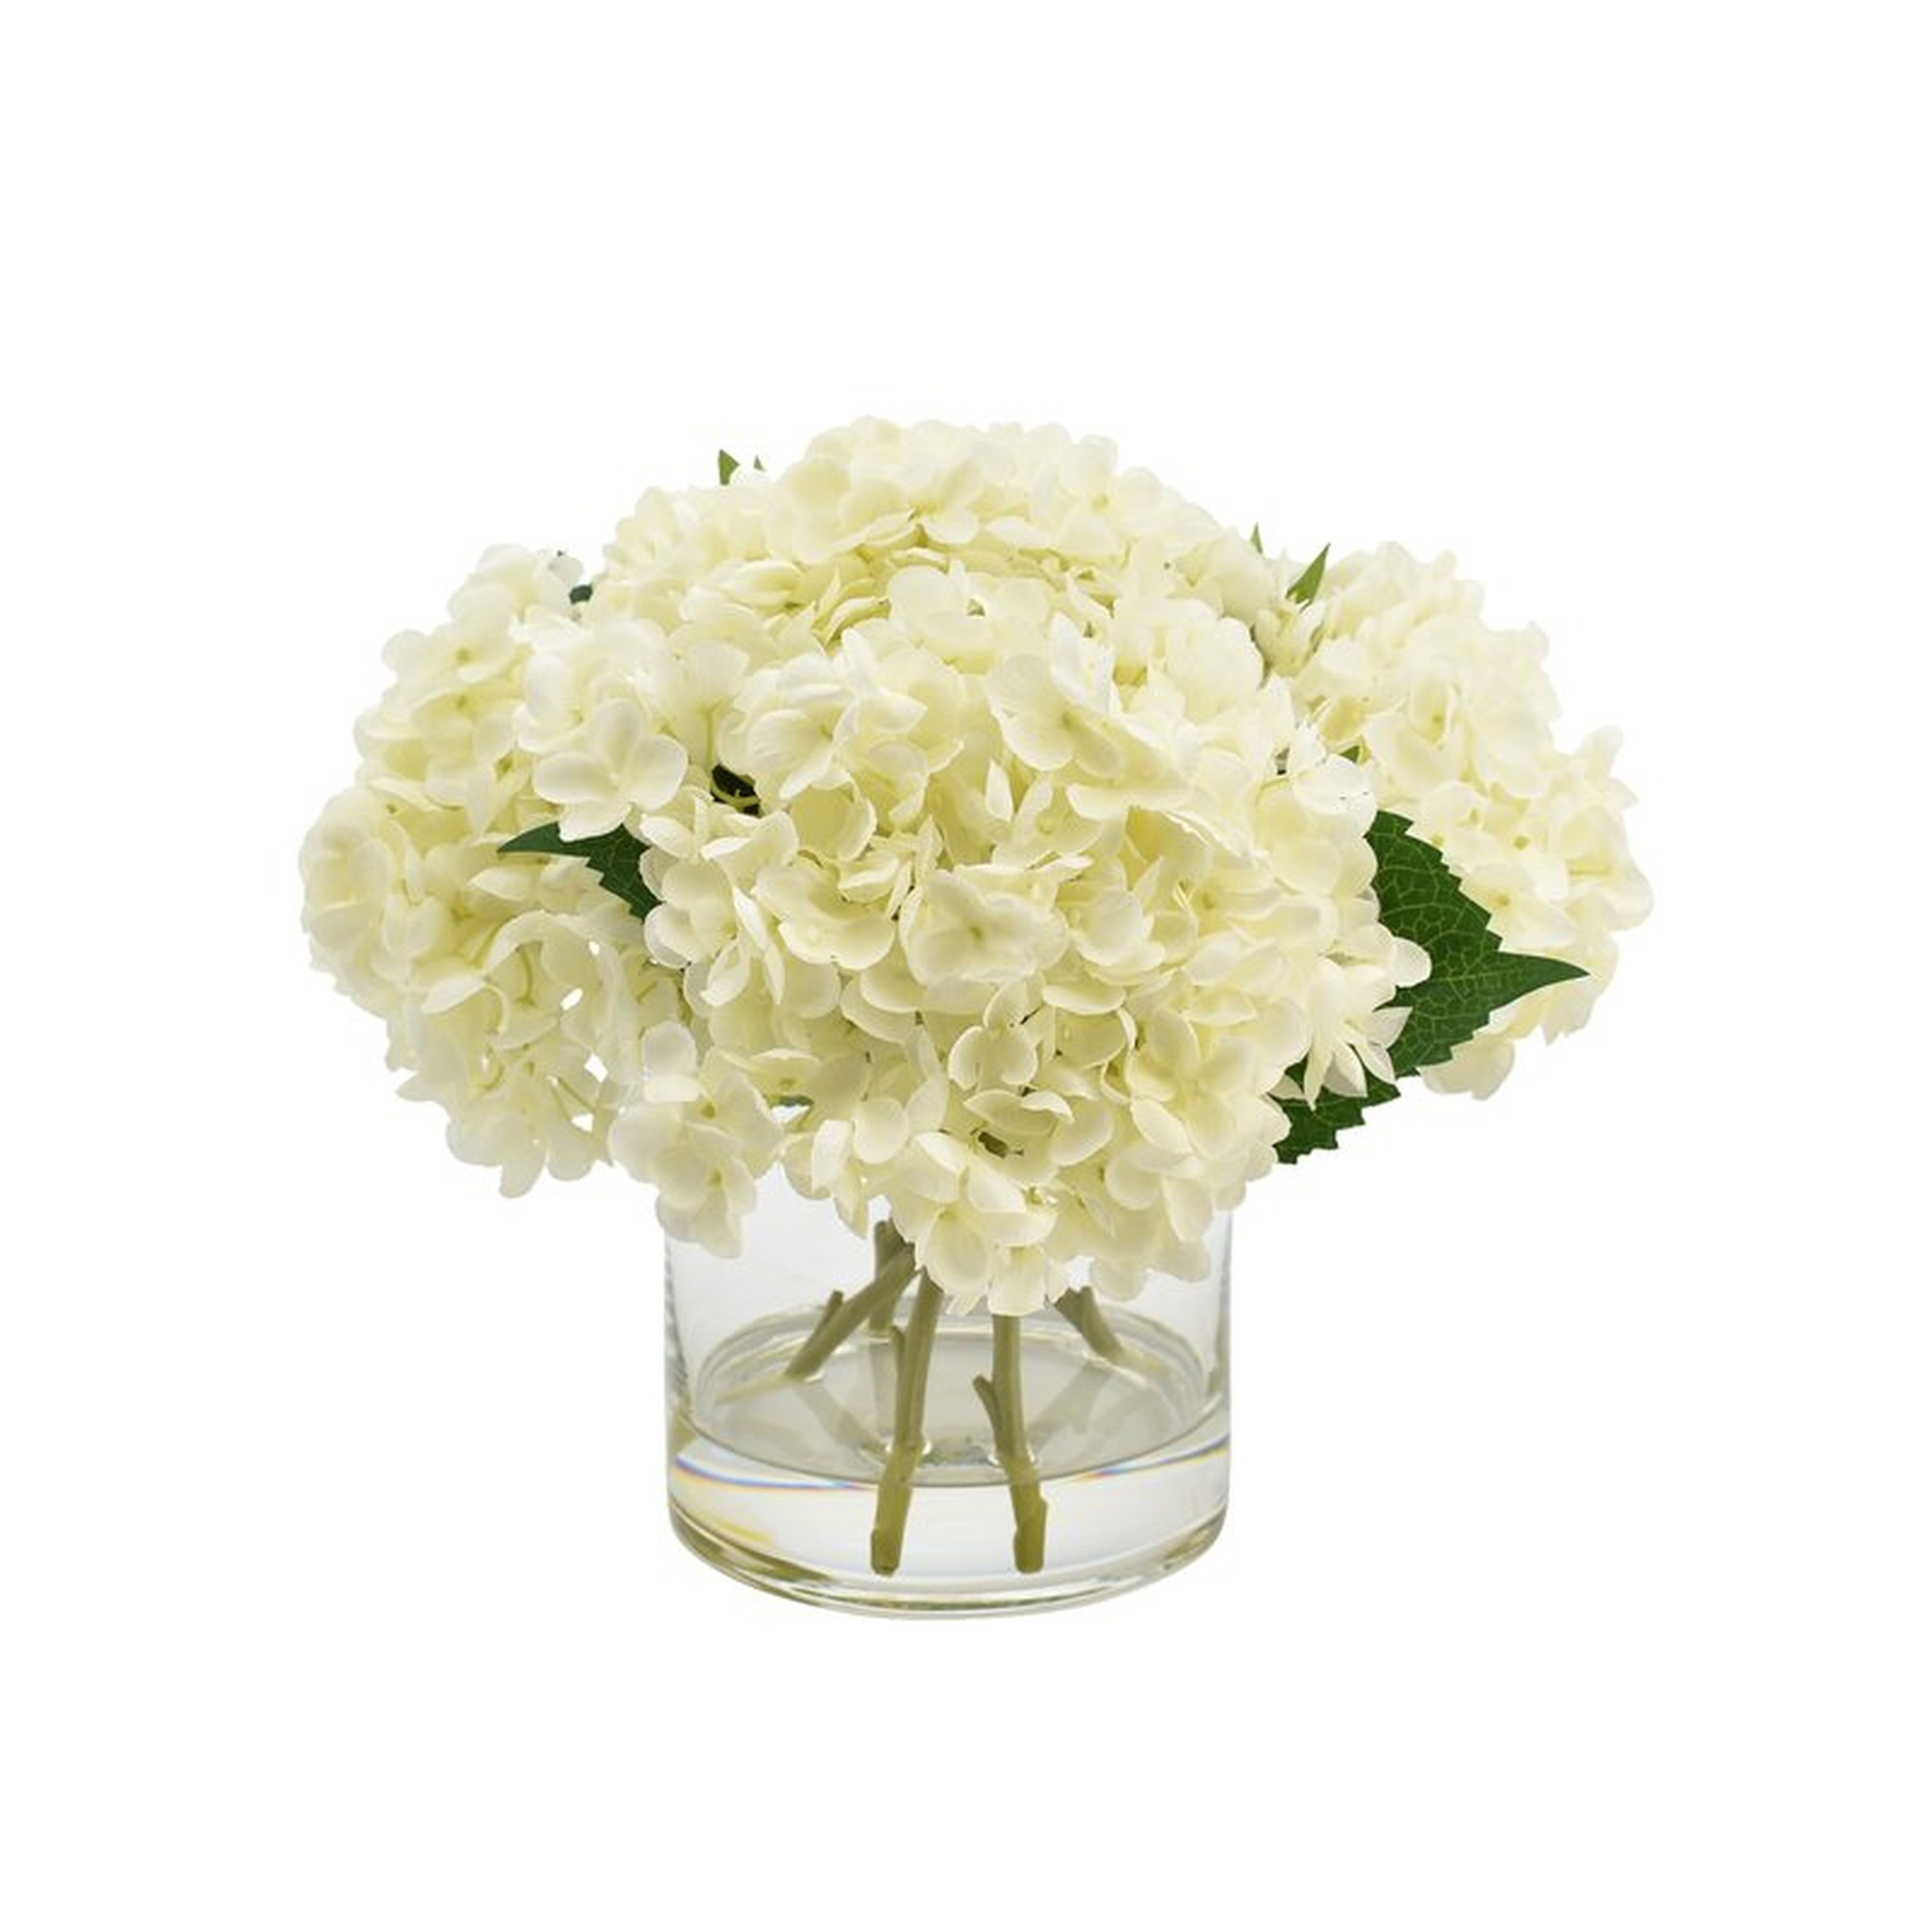 Hydrangea Floral Arrangement in Vase, White - Perigold